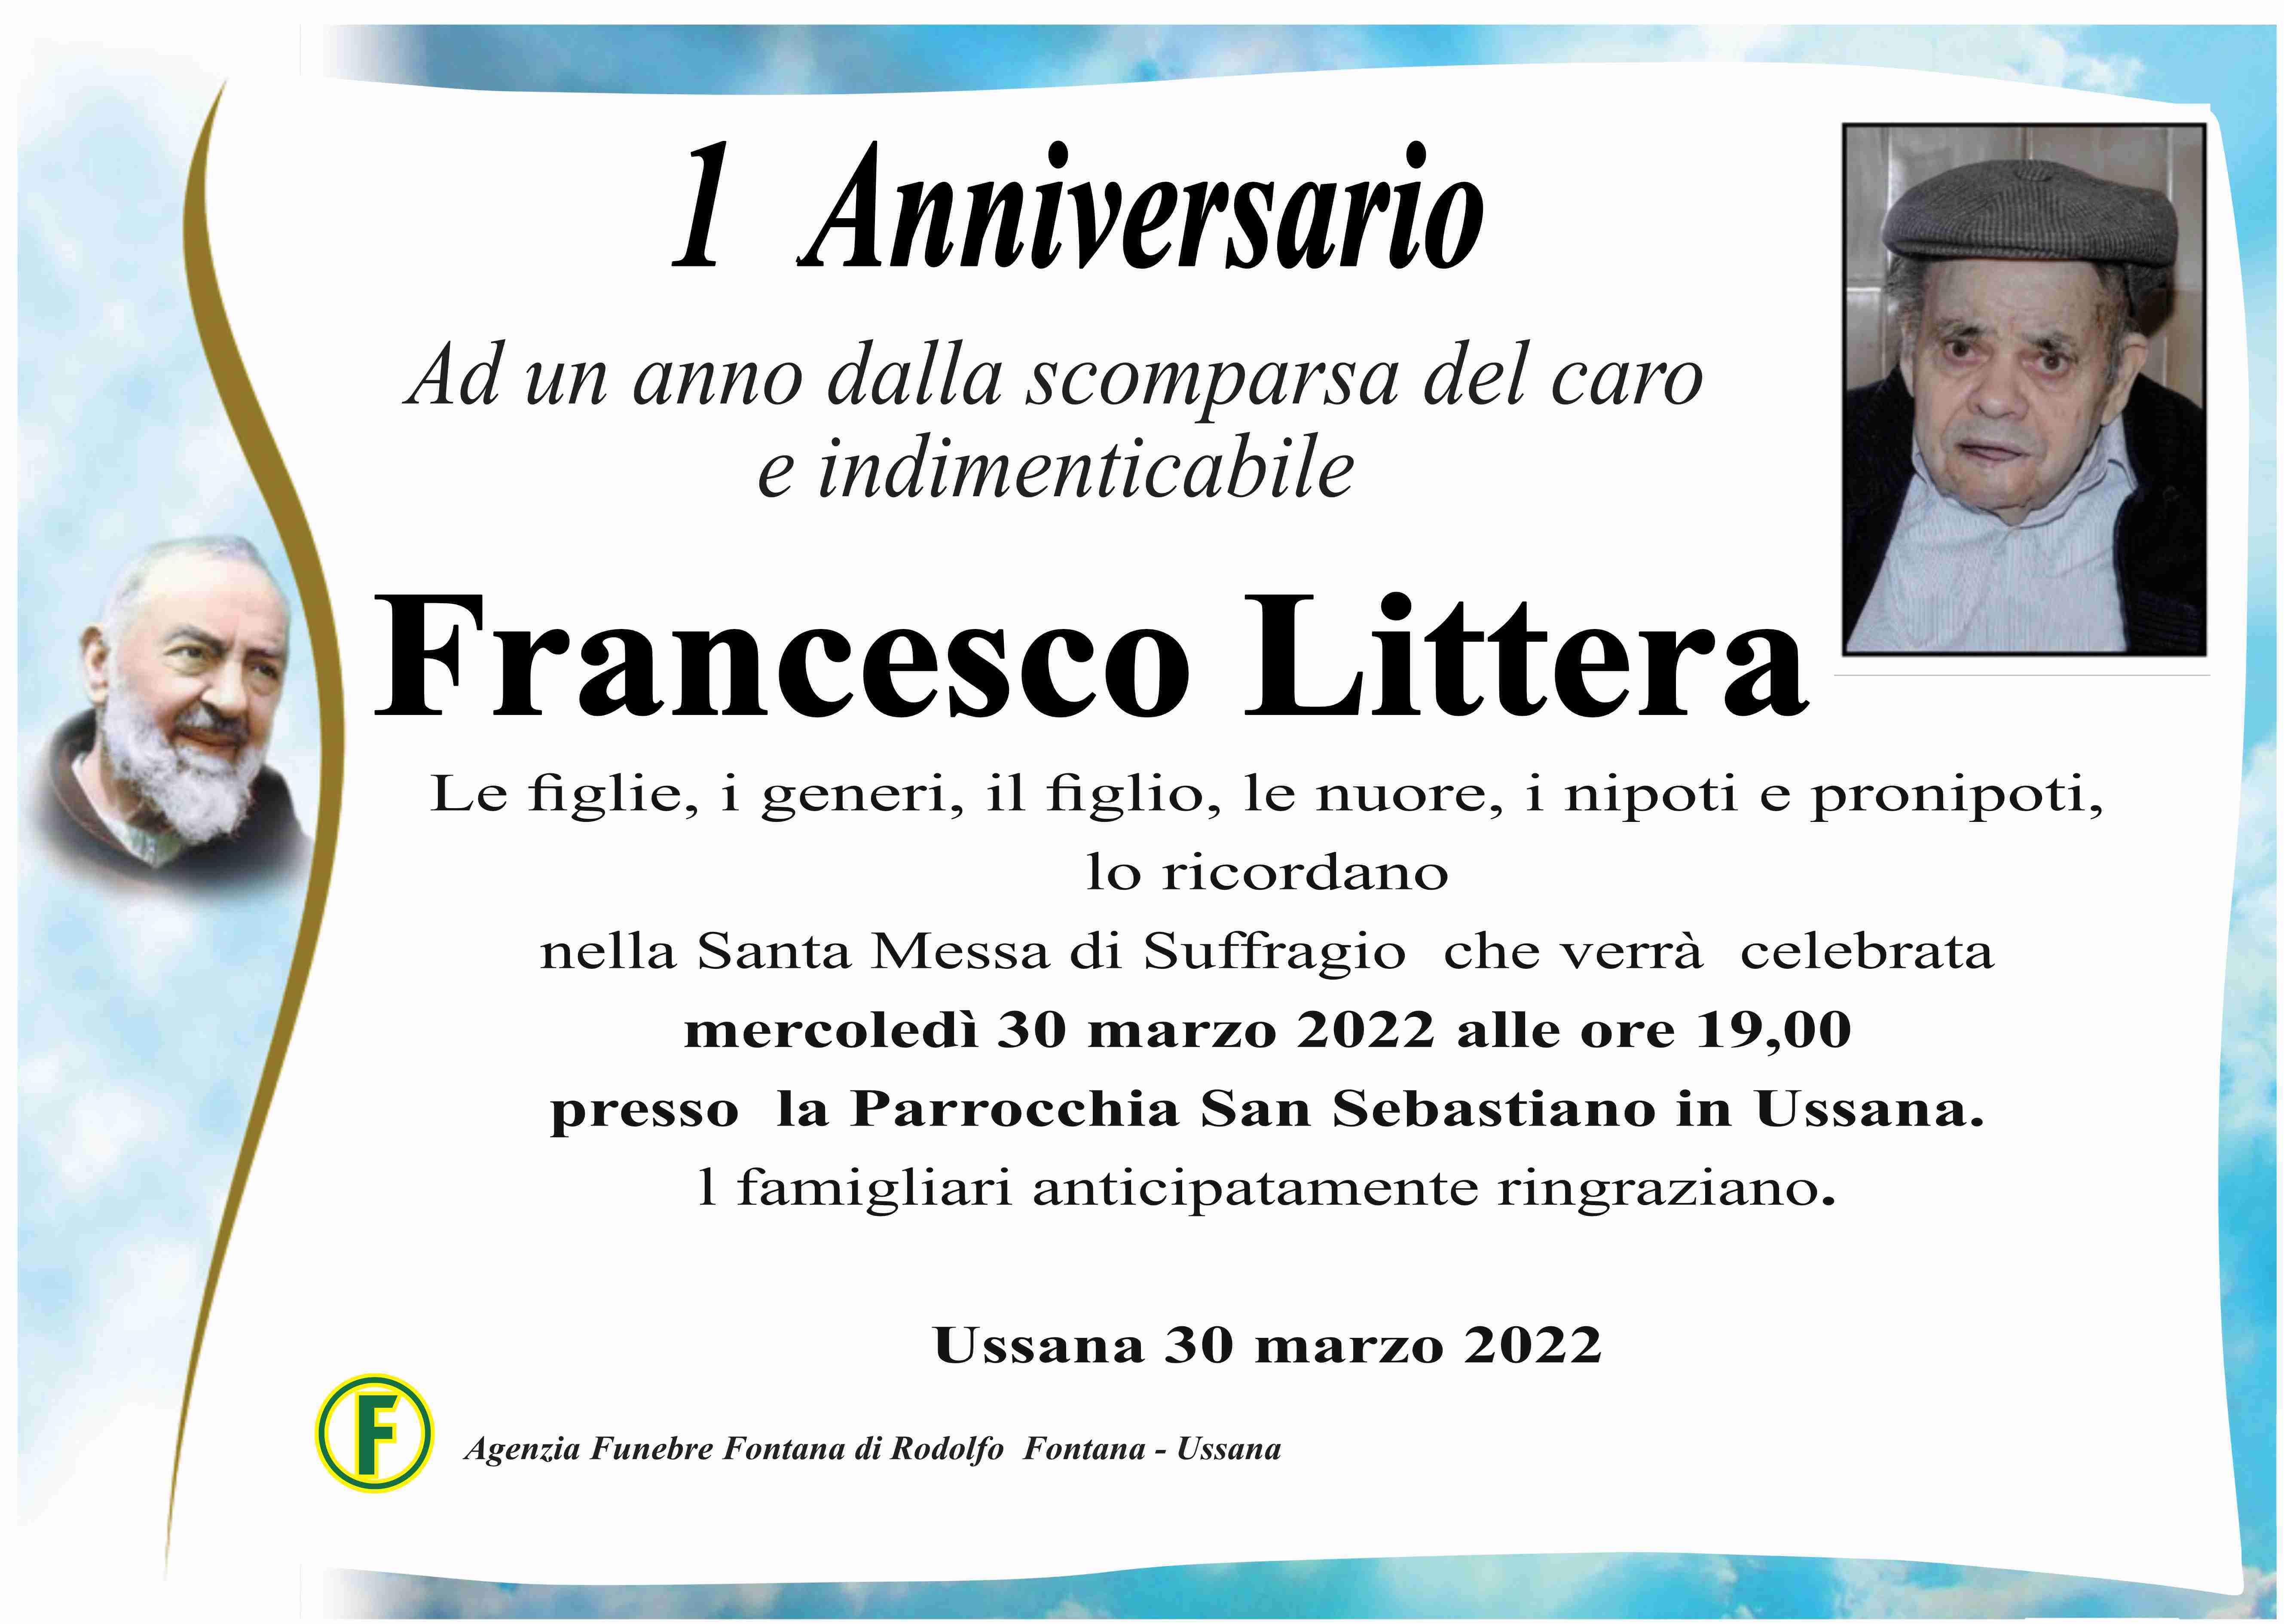 Francesco Littera